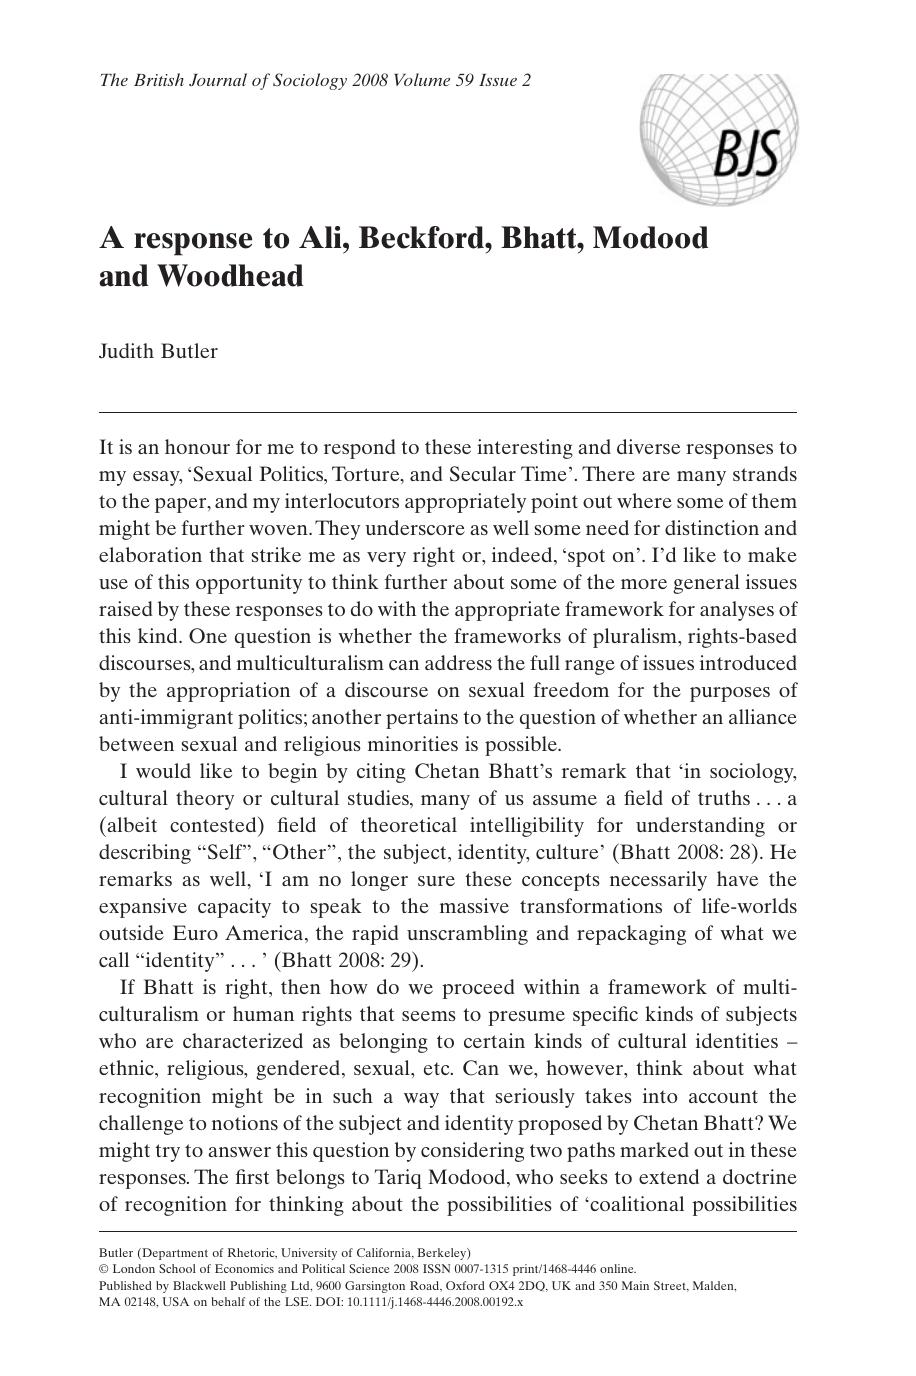 A response to Ali, Beckford, Bhatt, Modood  and Woodhead [Essay]